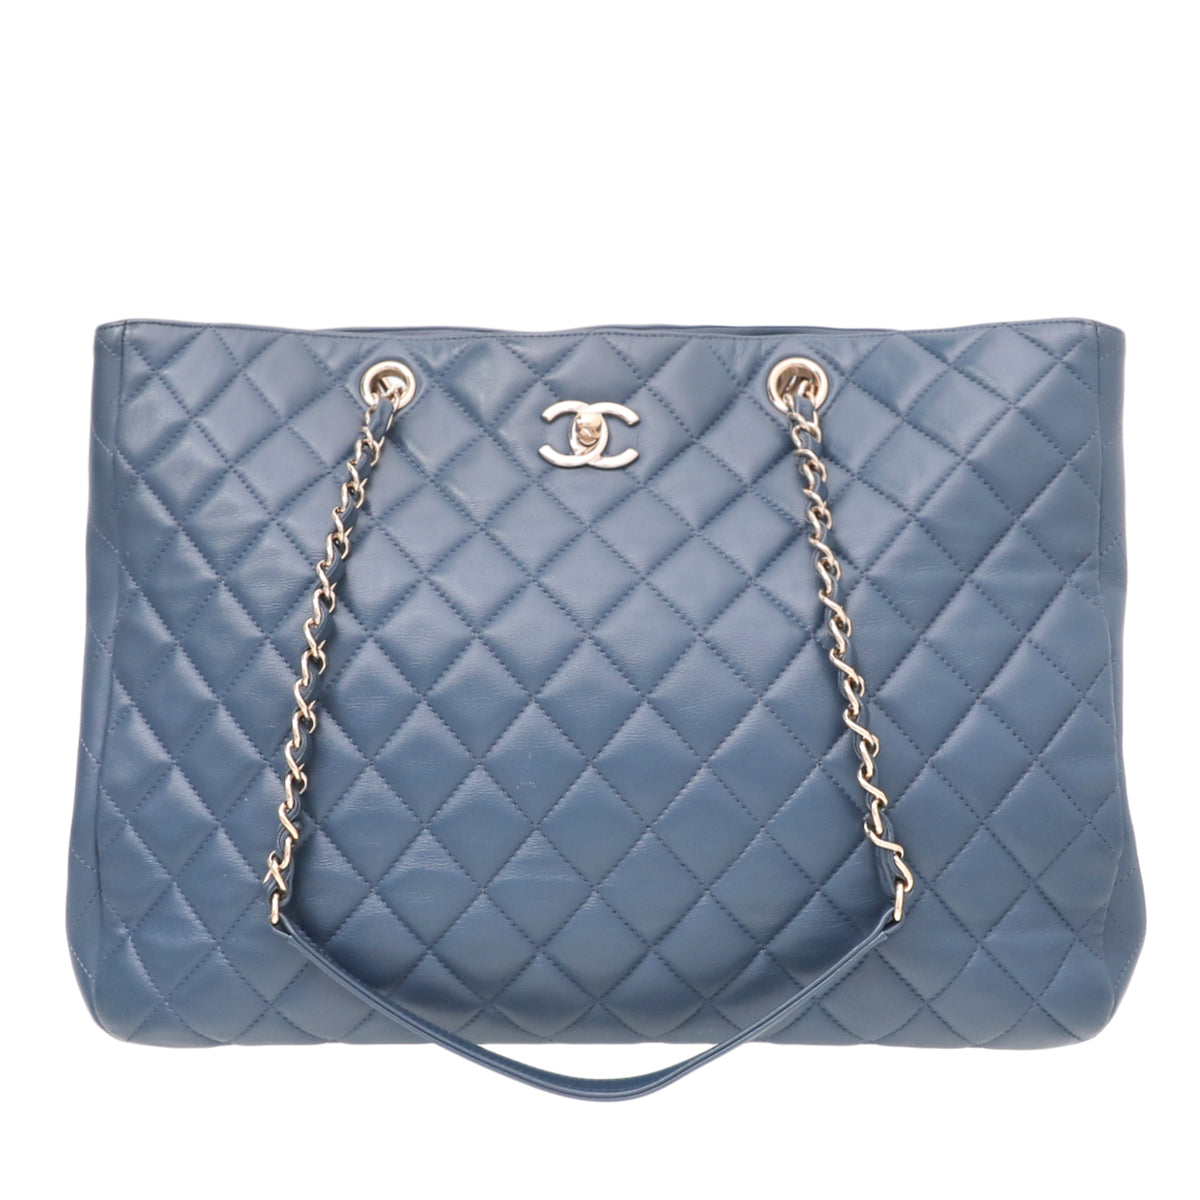 Chanel Blue CC Classic Shopping Tote Bag